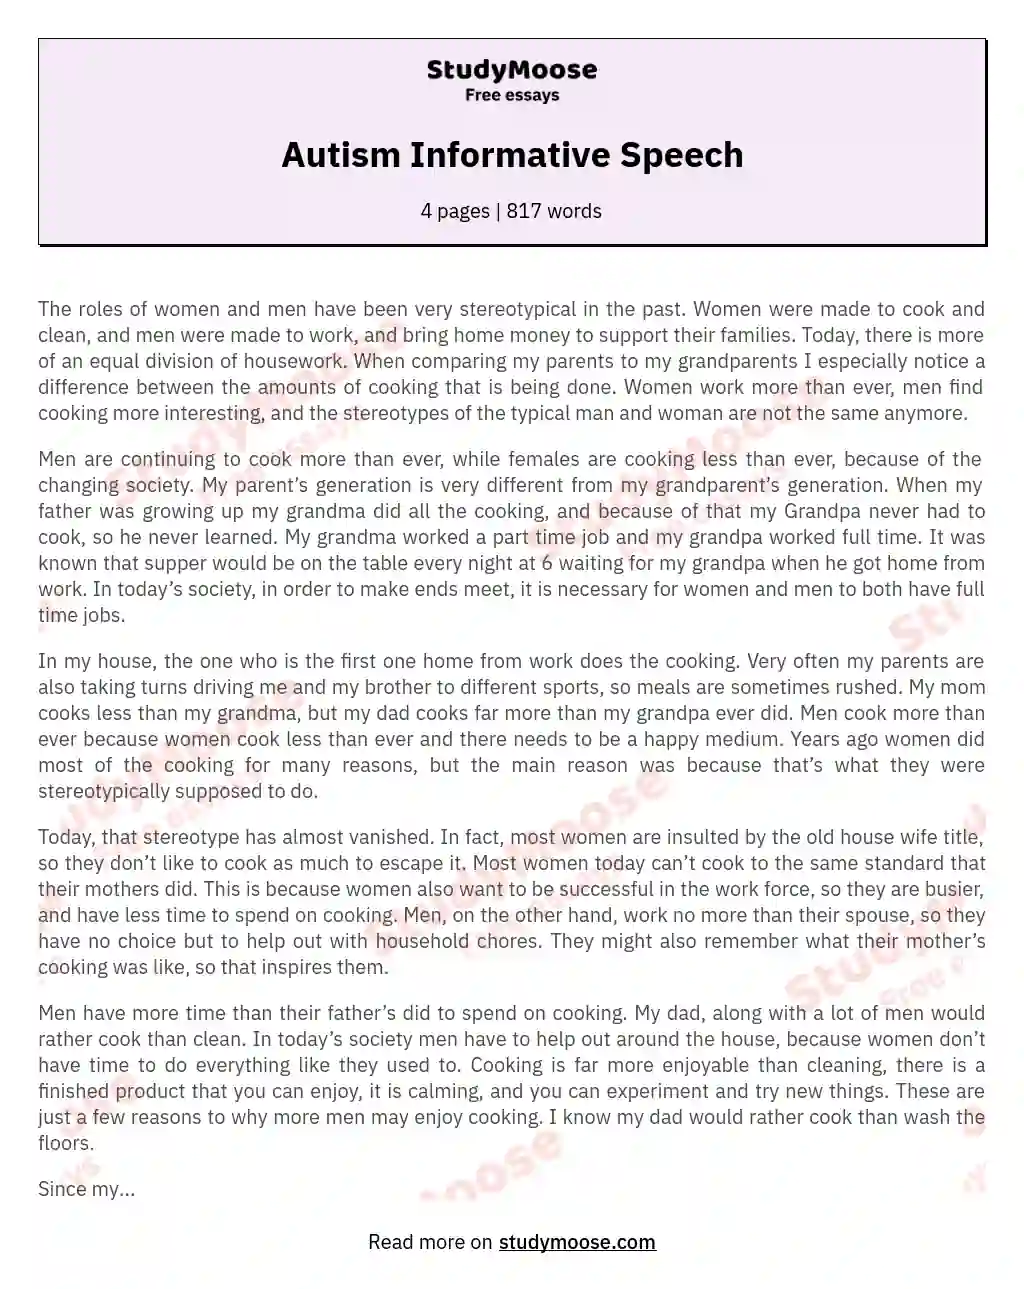 Autism Informative Speech essay